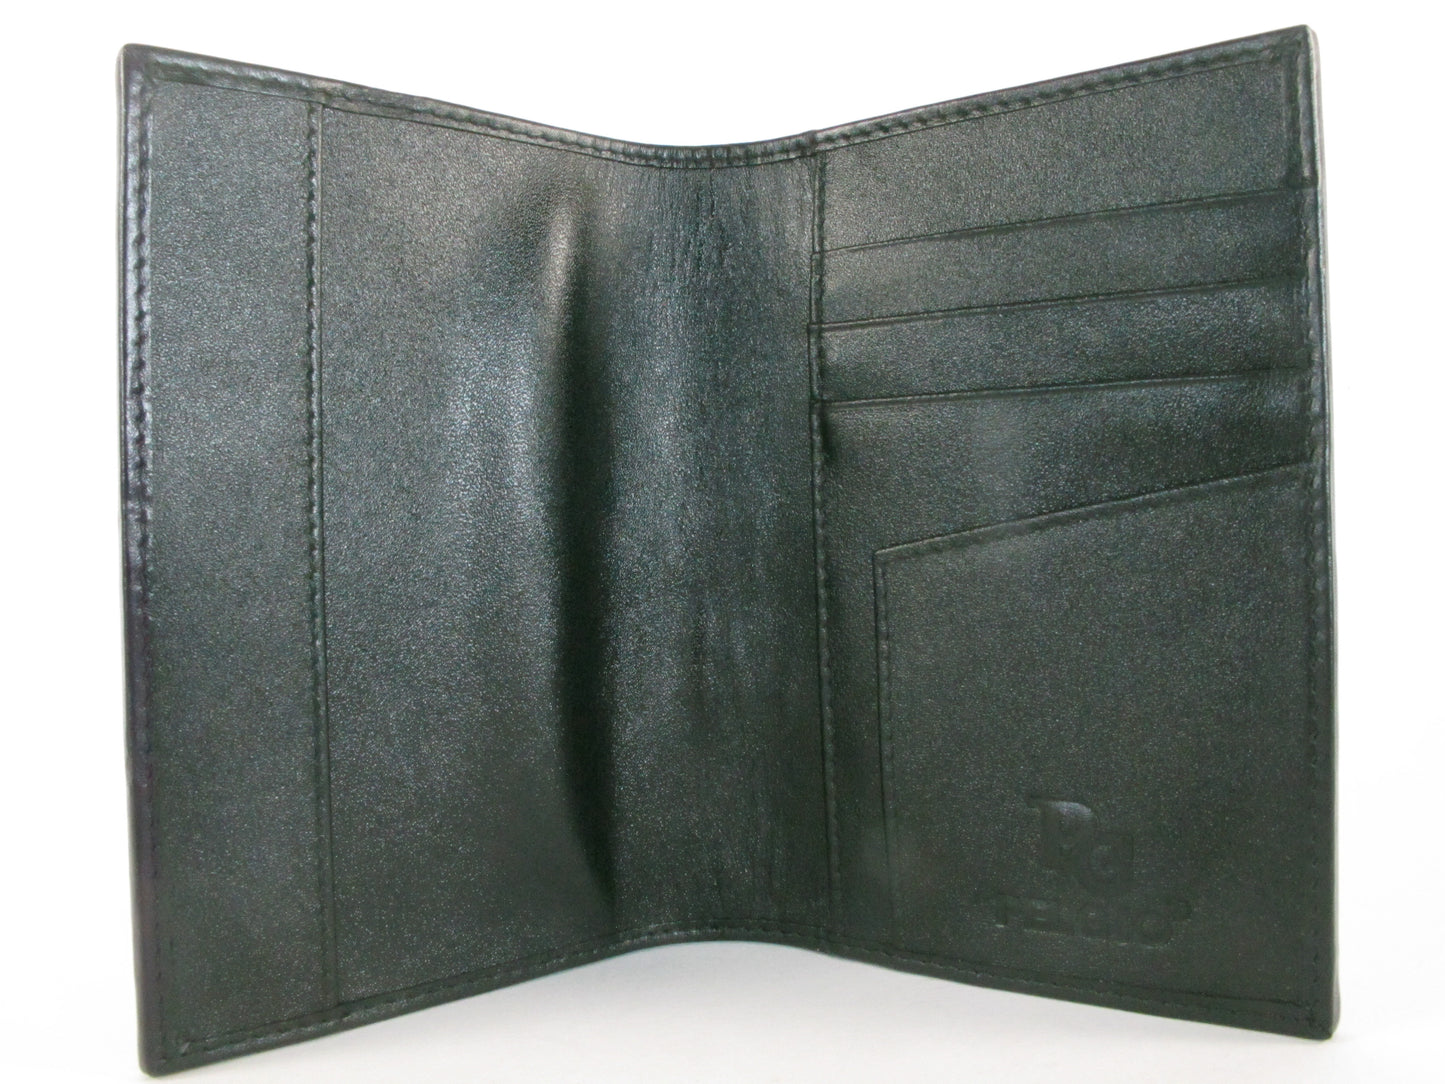 Genuine Stingray Skin Leather Passport & Card Holder Wallet